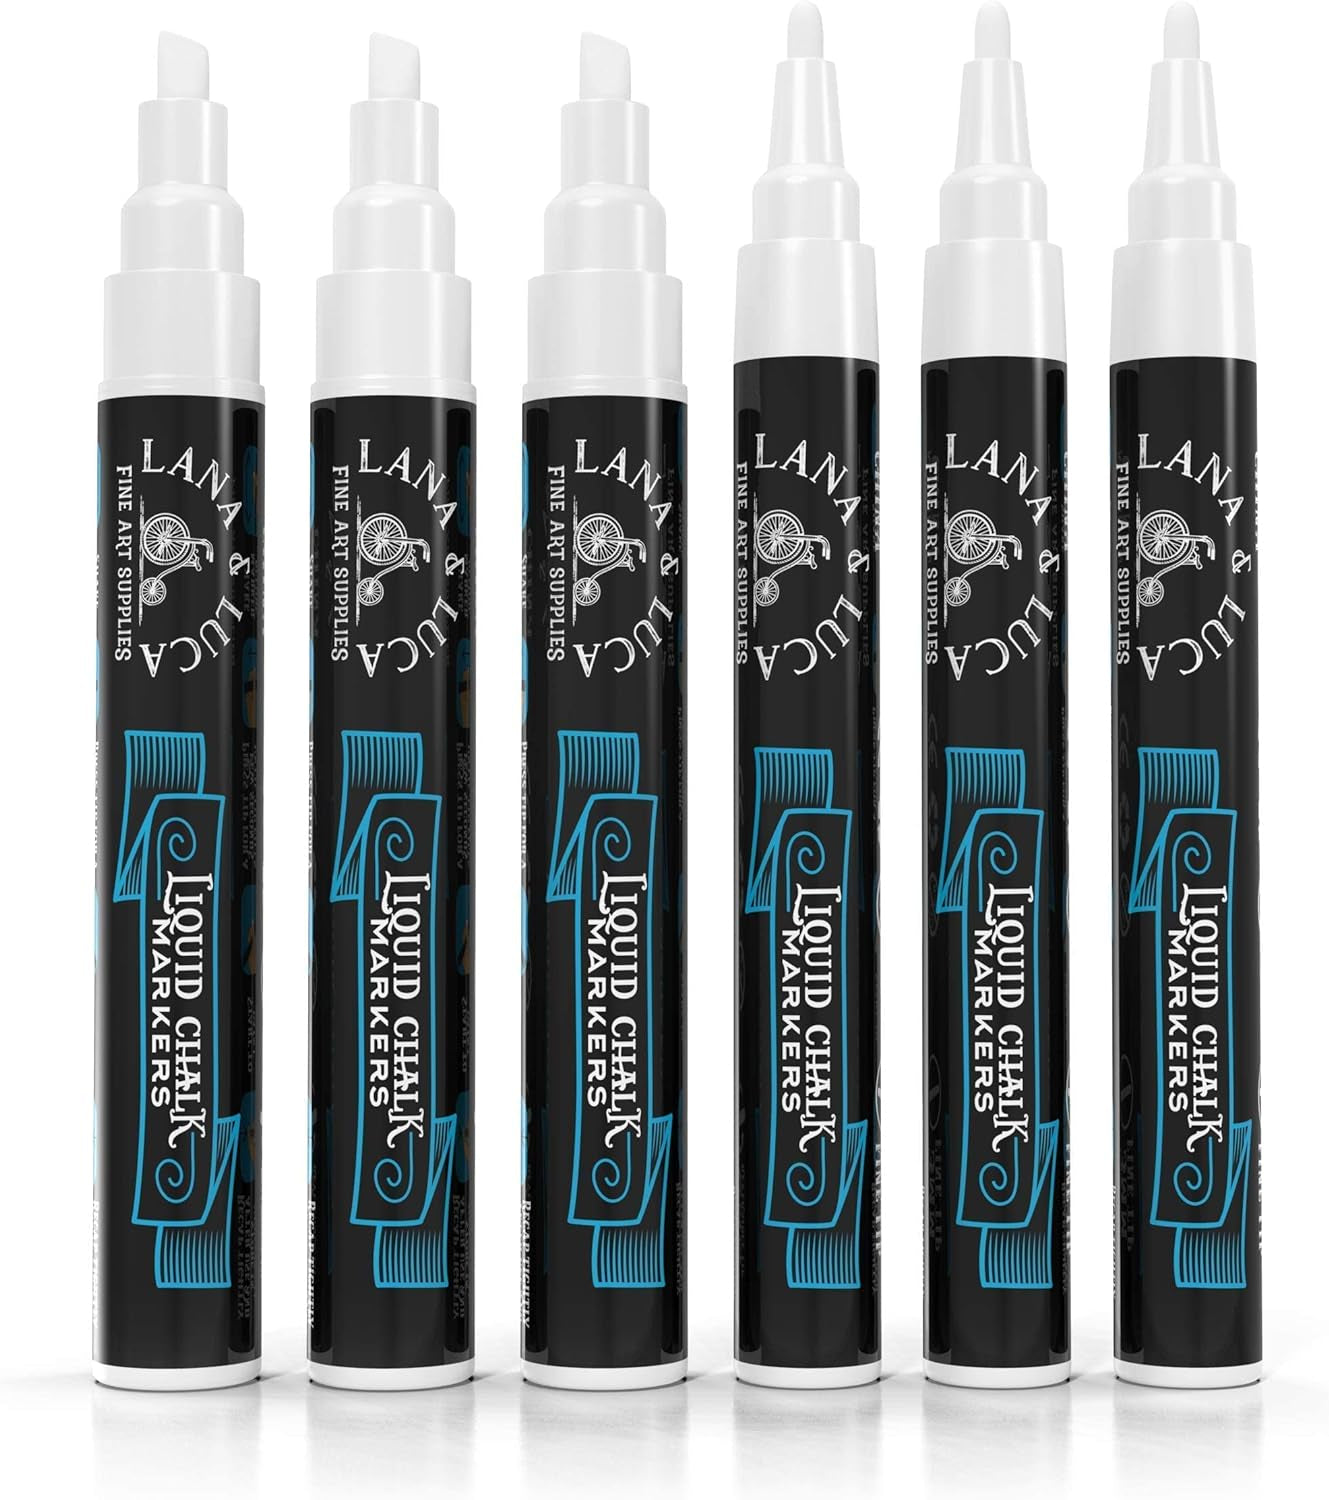 Liquid Chalk Marker Pen - White, Dry Erase for Chalkboard Signs, Windows, Blackboard, Glass with 24 Chalkboard Labels Included (6 Pack) 3-6Mm Reversible Tip, 3-3Mm Fine Tip